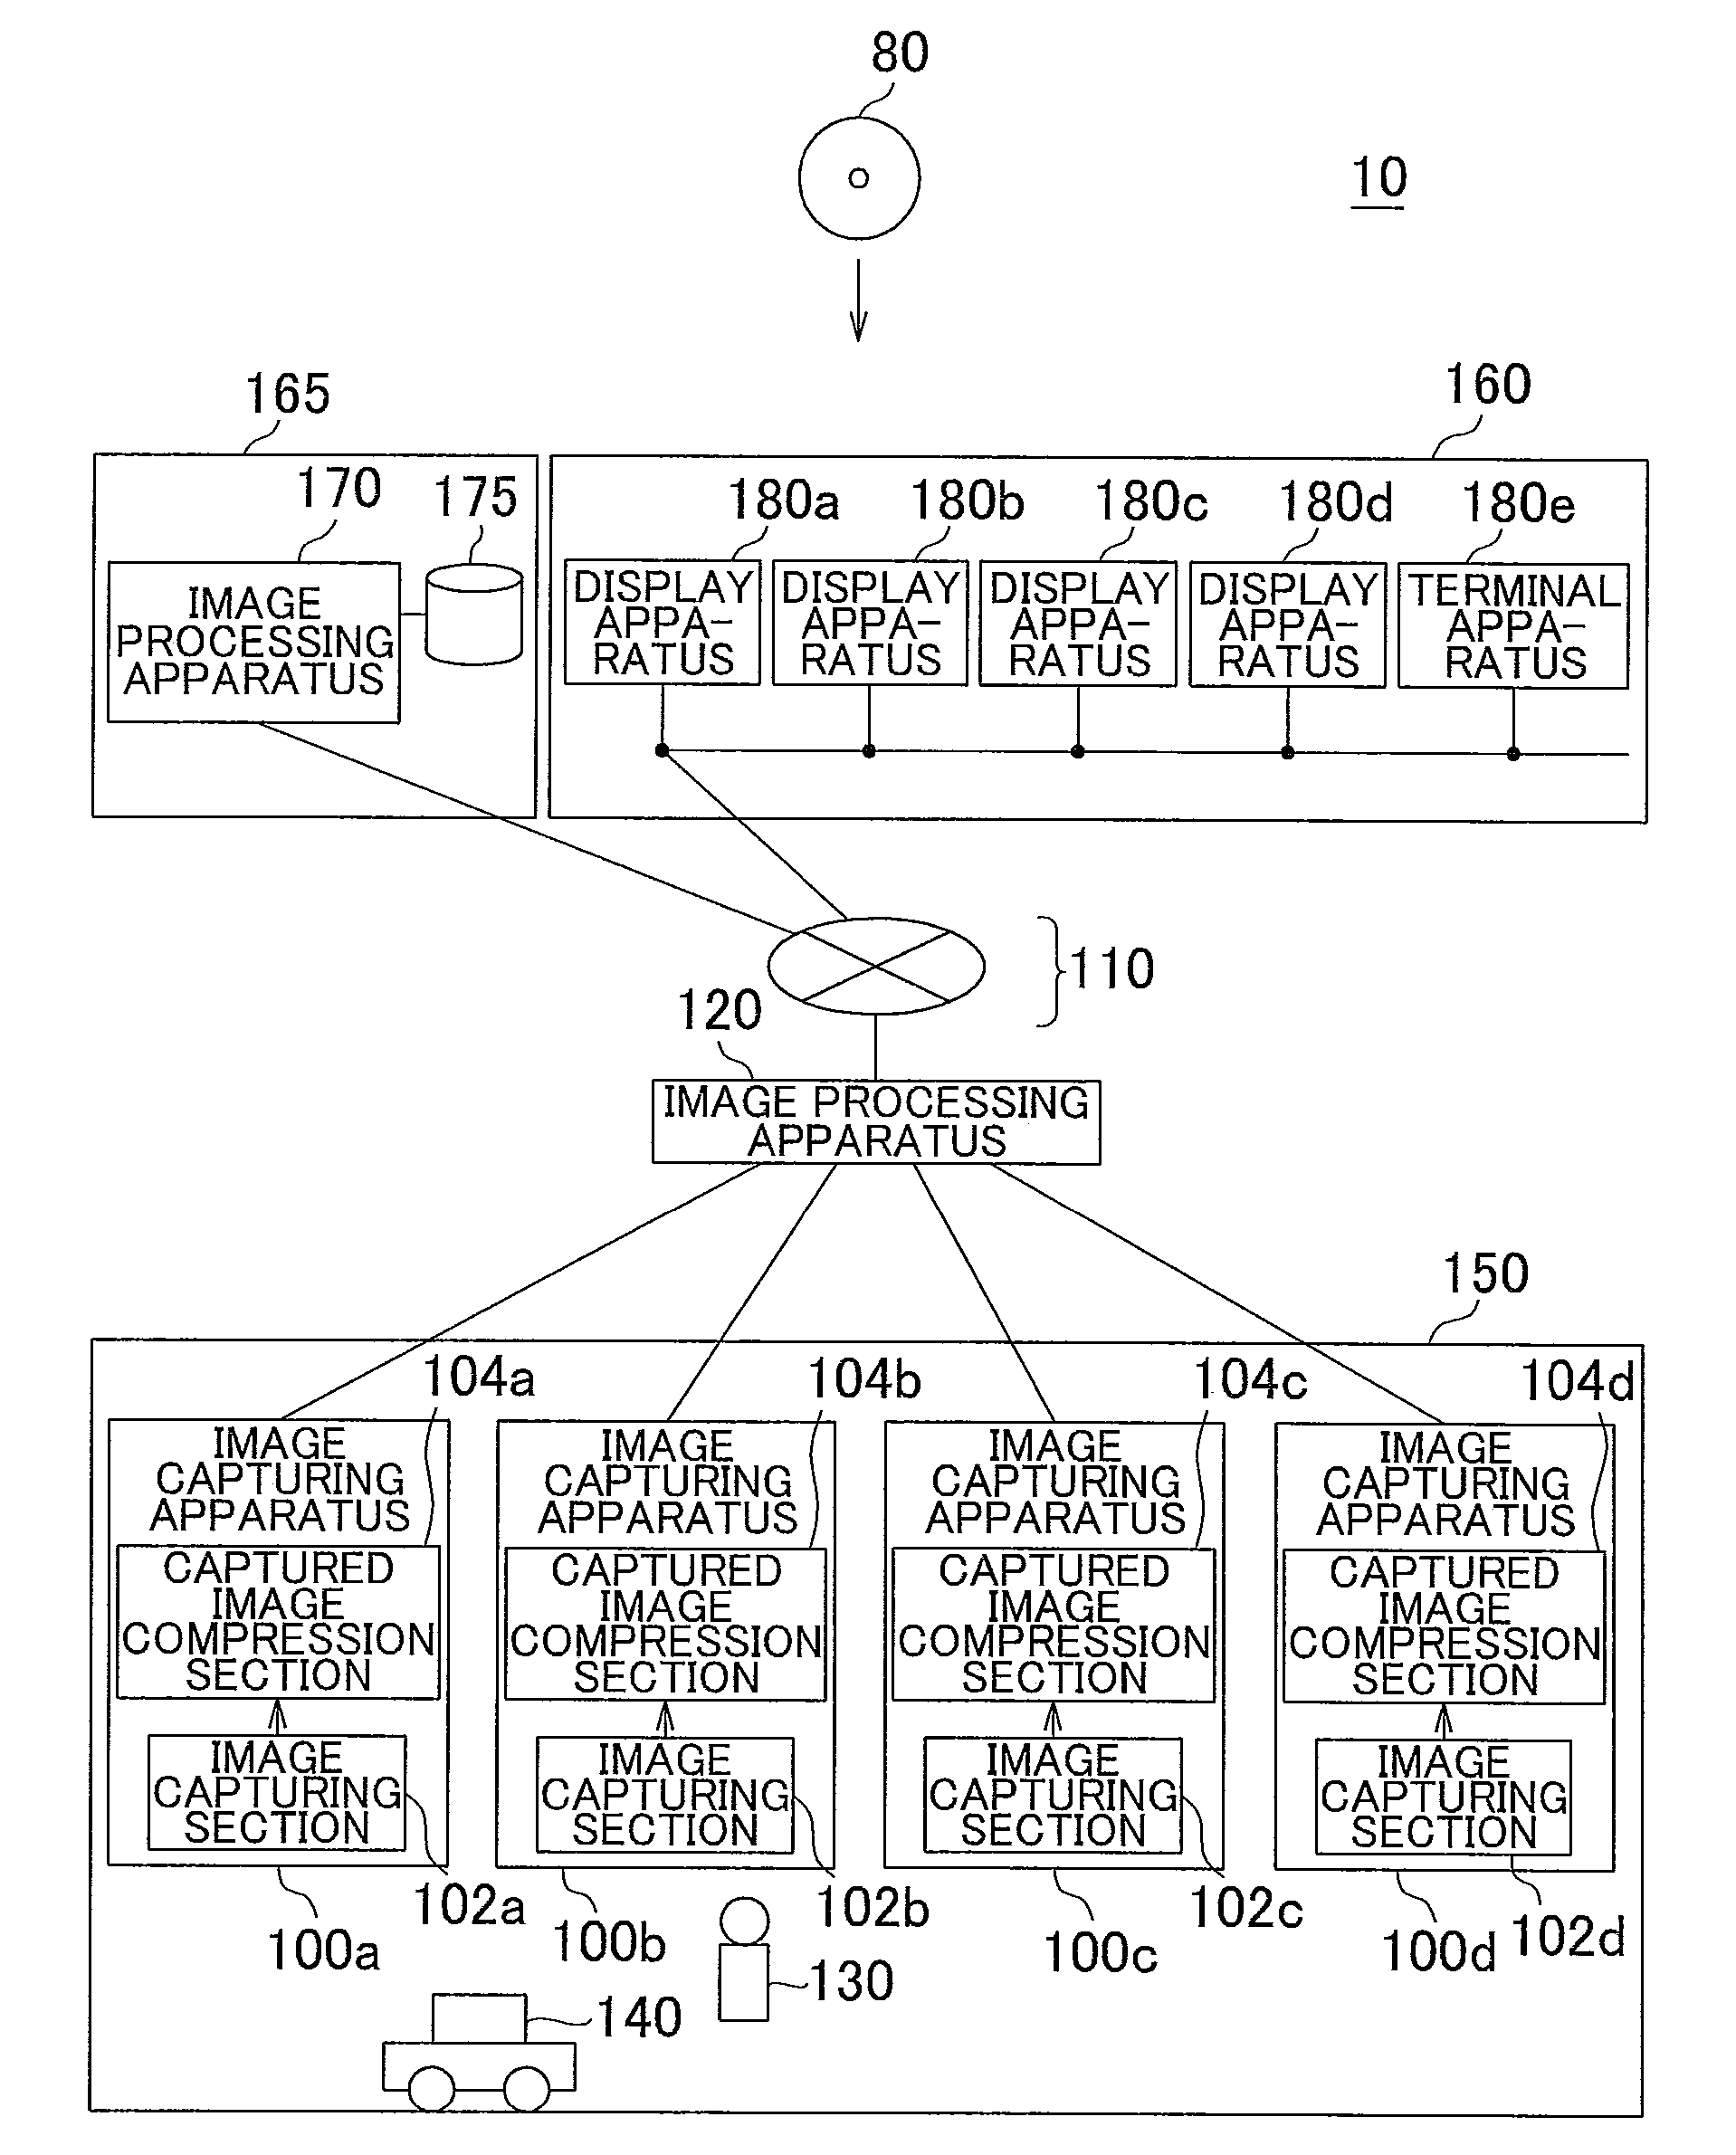 Image processing apparatus, image processing method, and computer readable medium